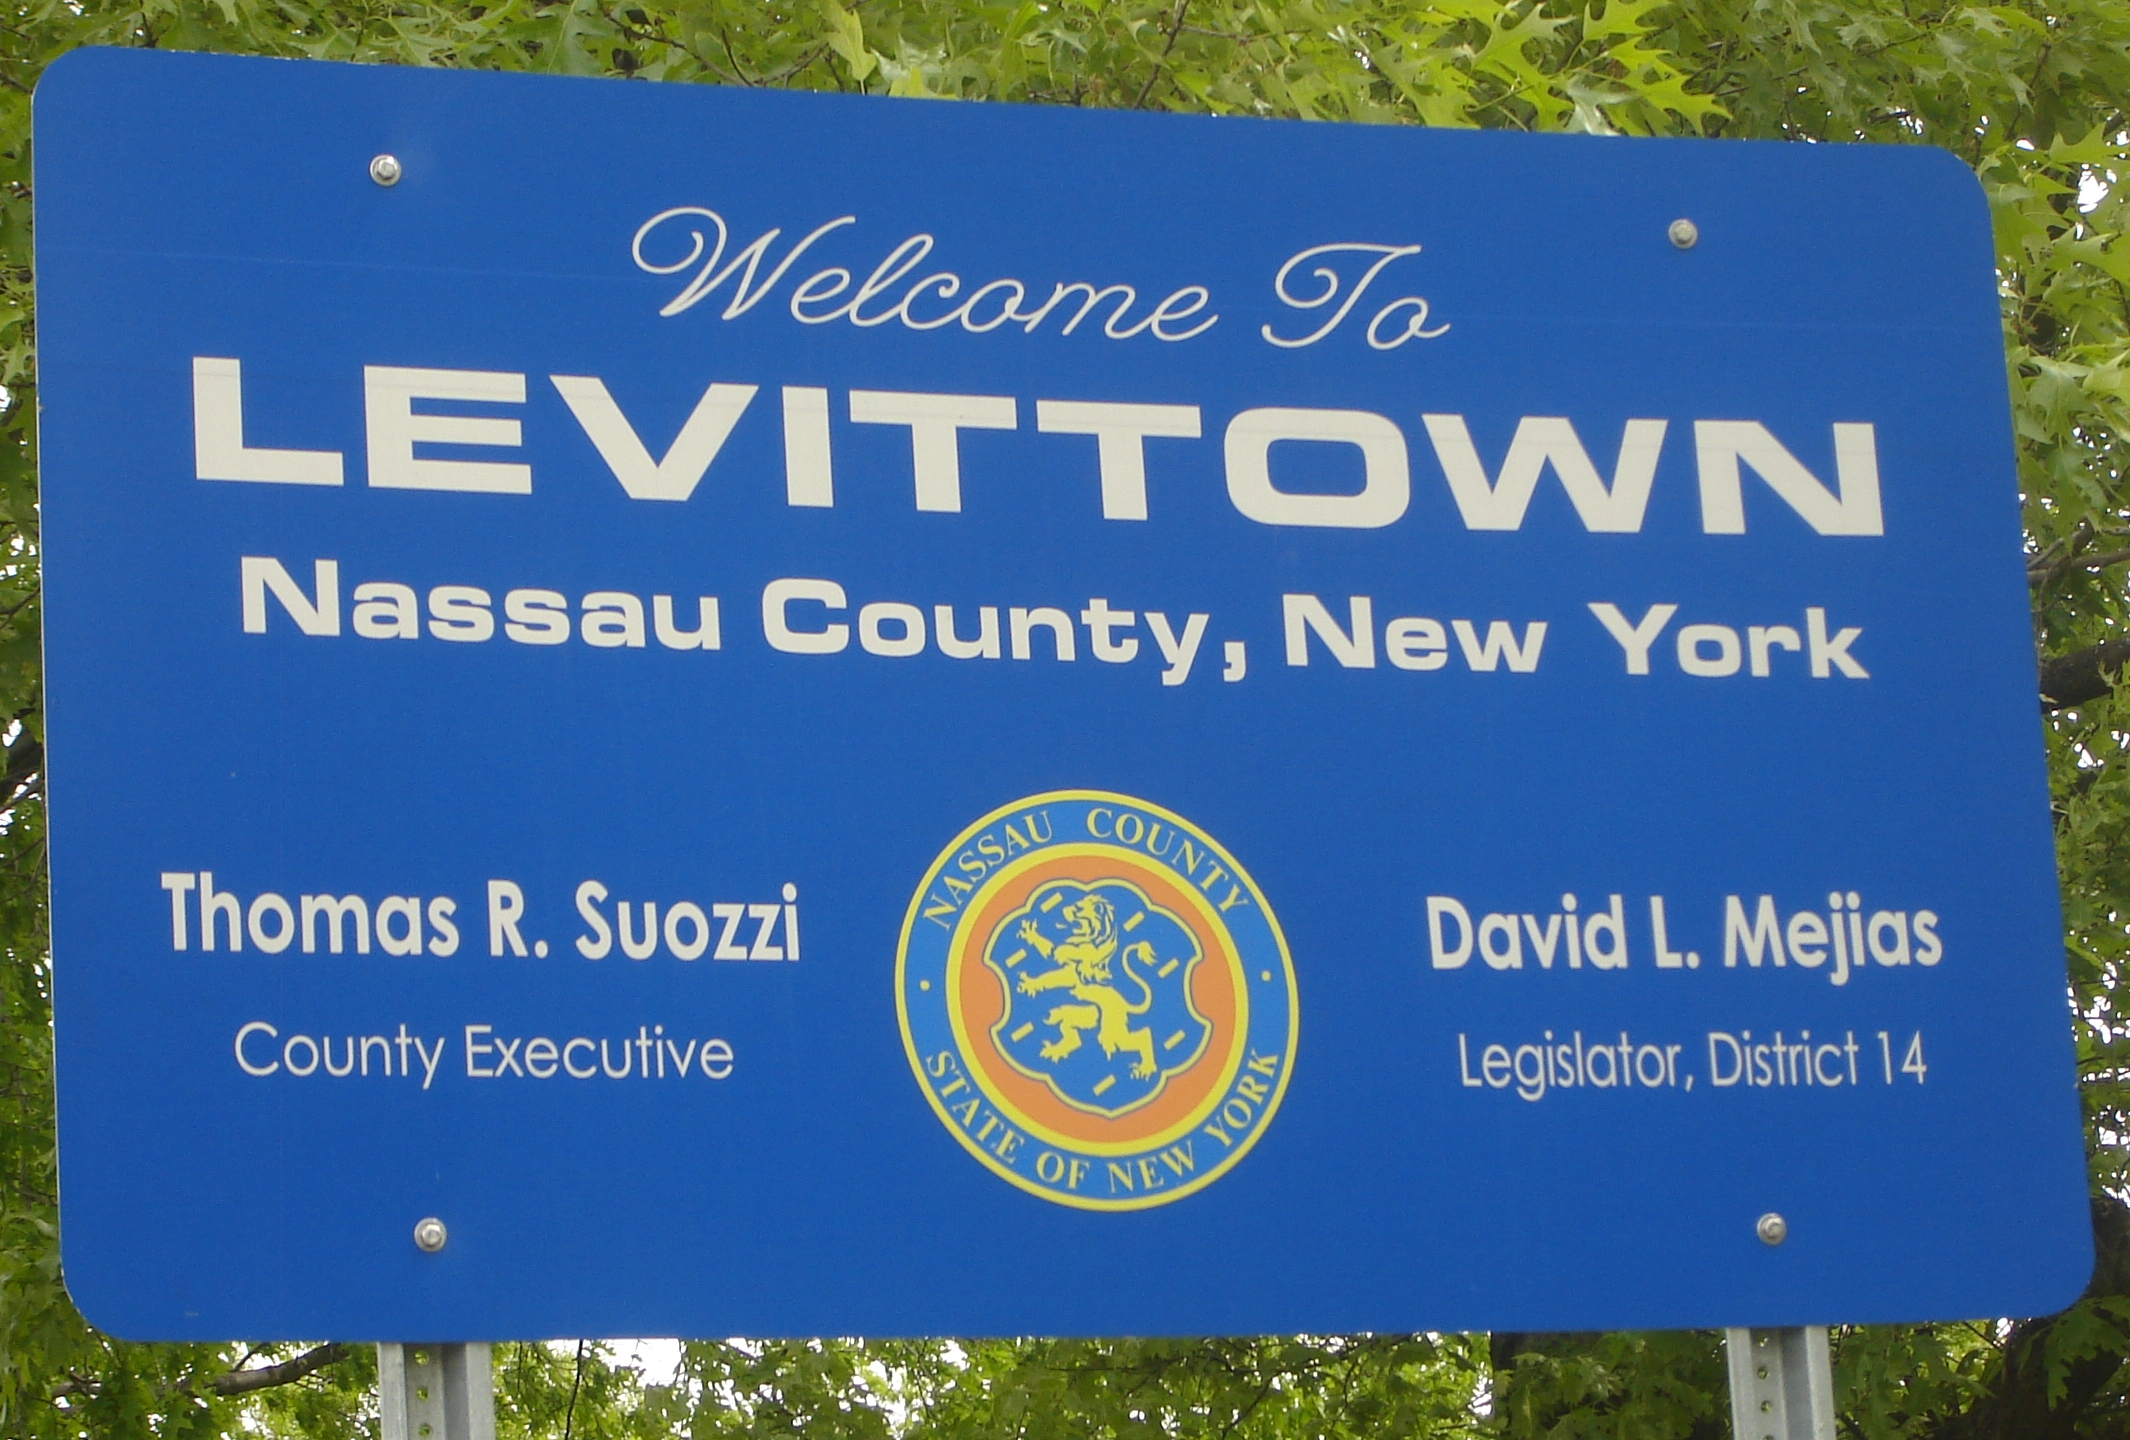 Levittown Nassau County, NY